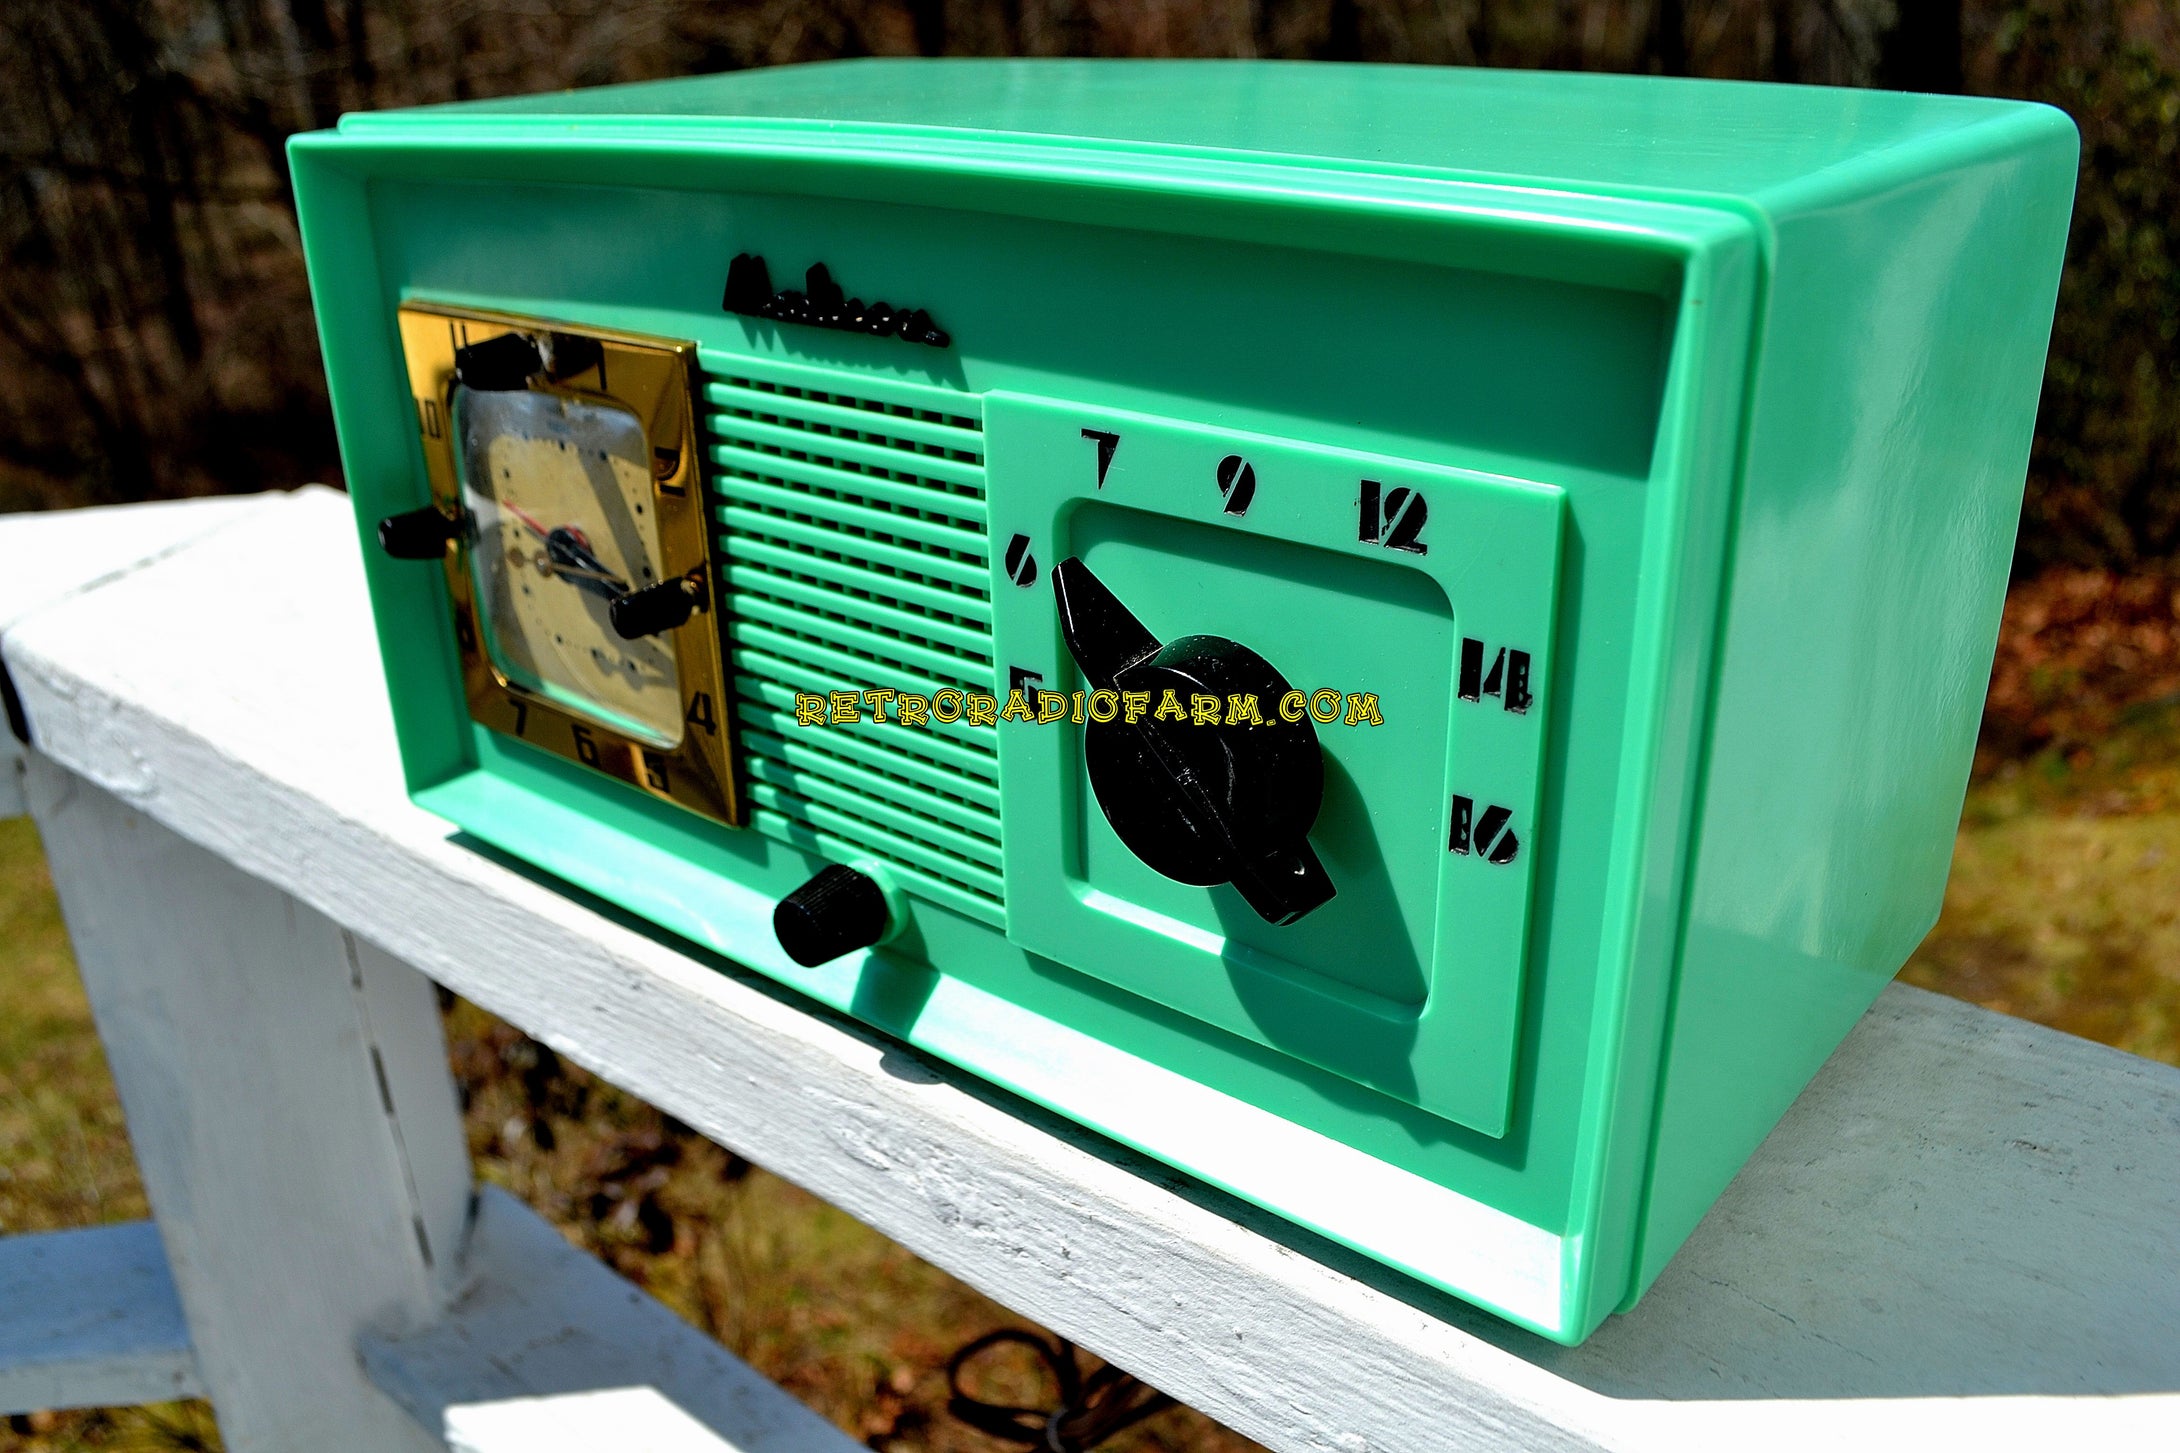 SOLD! - Oct 25, 2018 - Madison in April Green Art Deco Vintage 1948 Model 940 AM Tube Clock Radio Near Mint Condition! - [product_type} - Madison - Retro Radio Farm